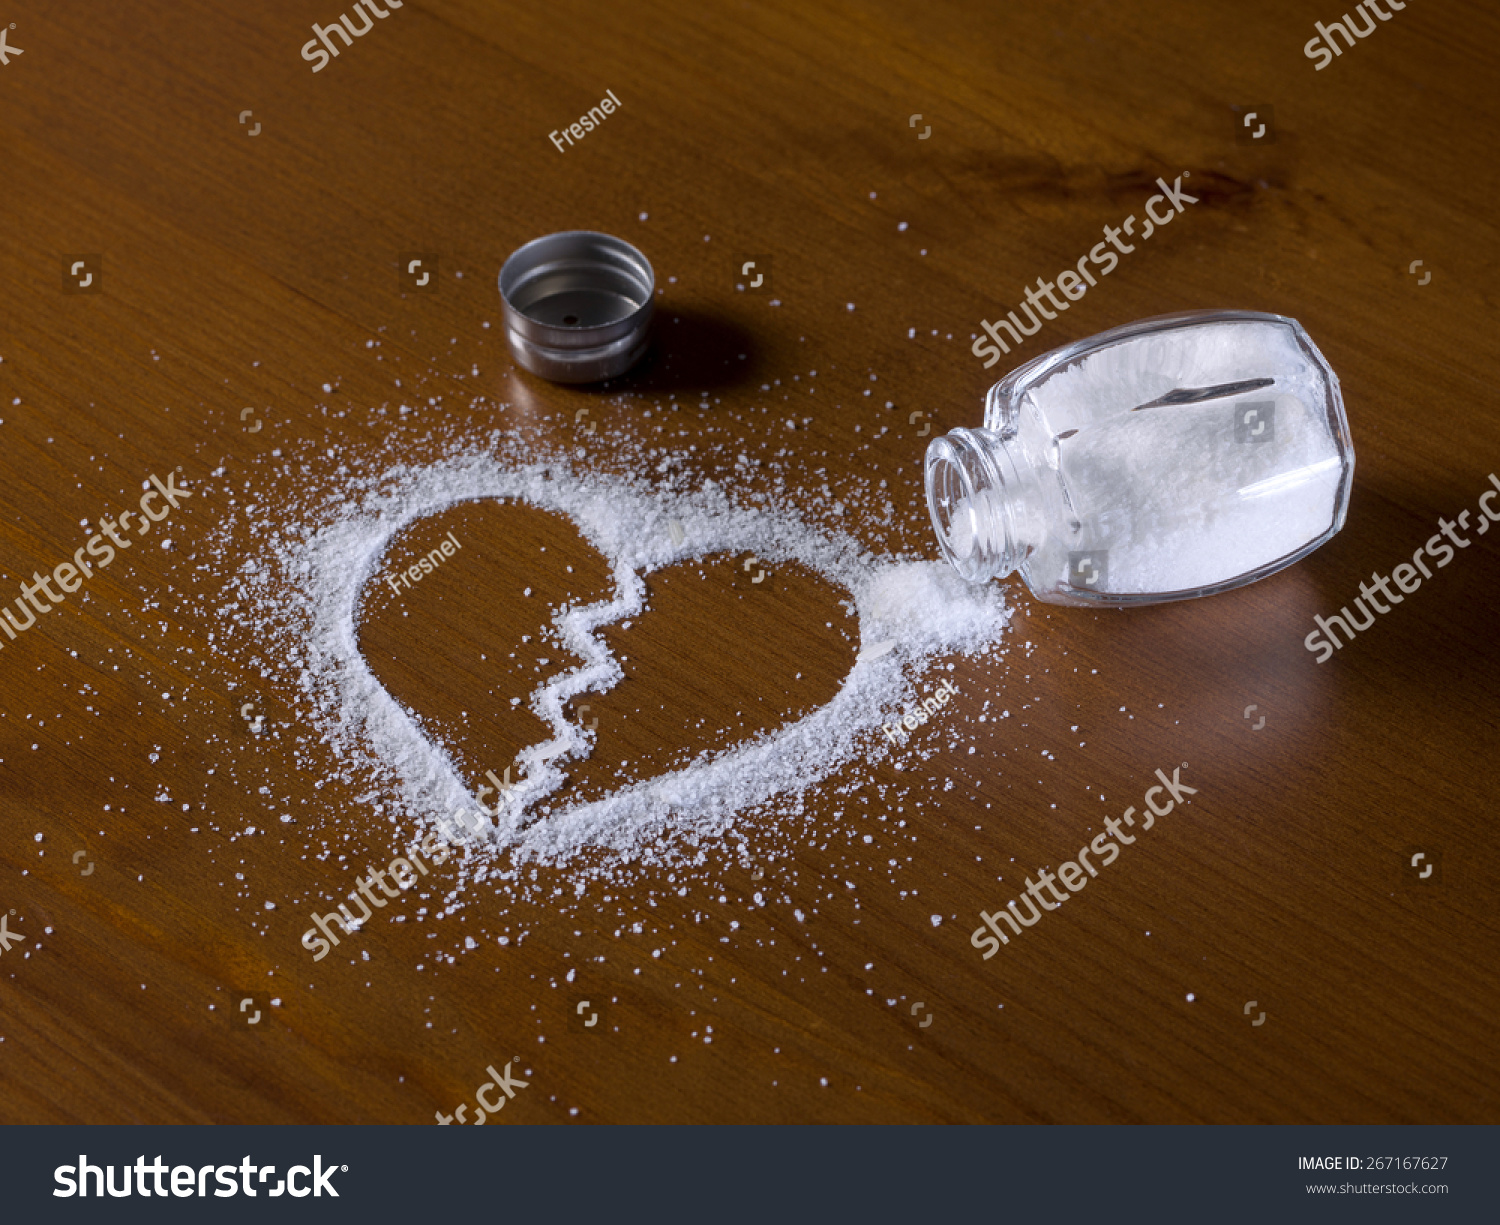 Image result for heart drawn in salt